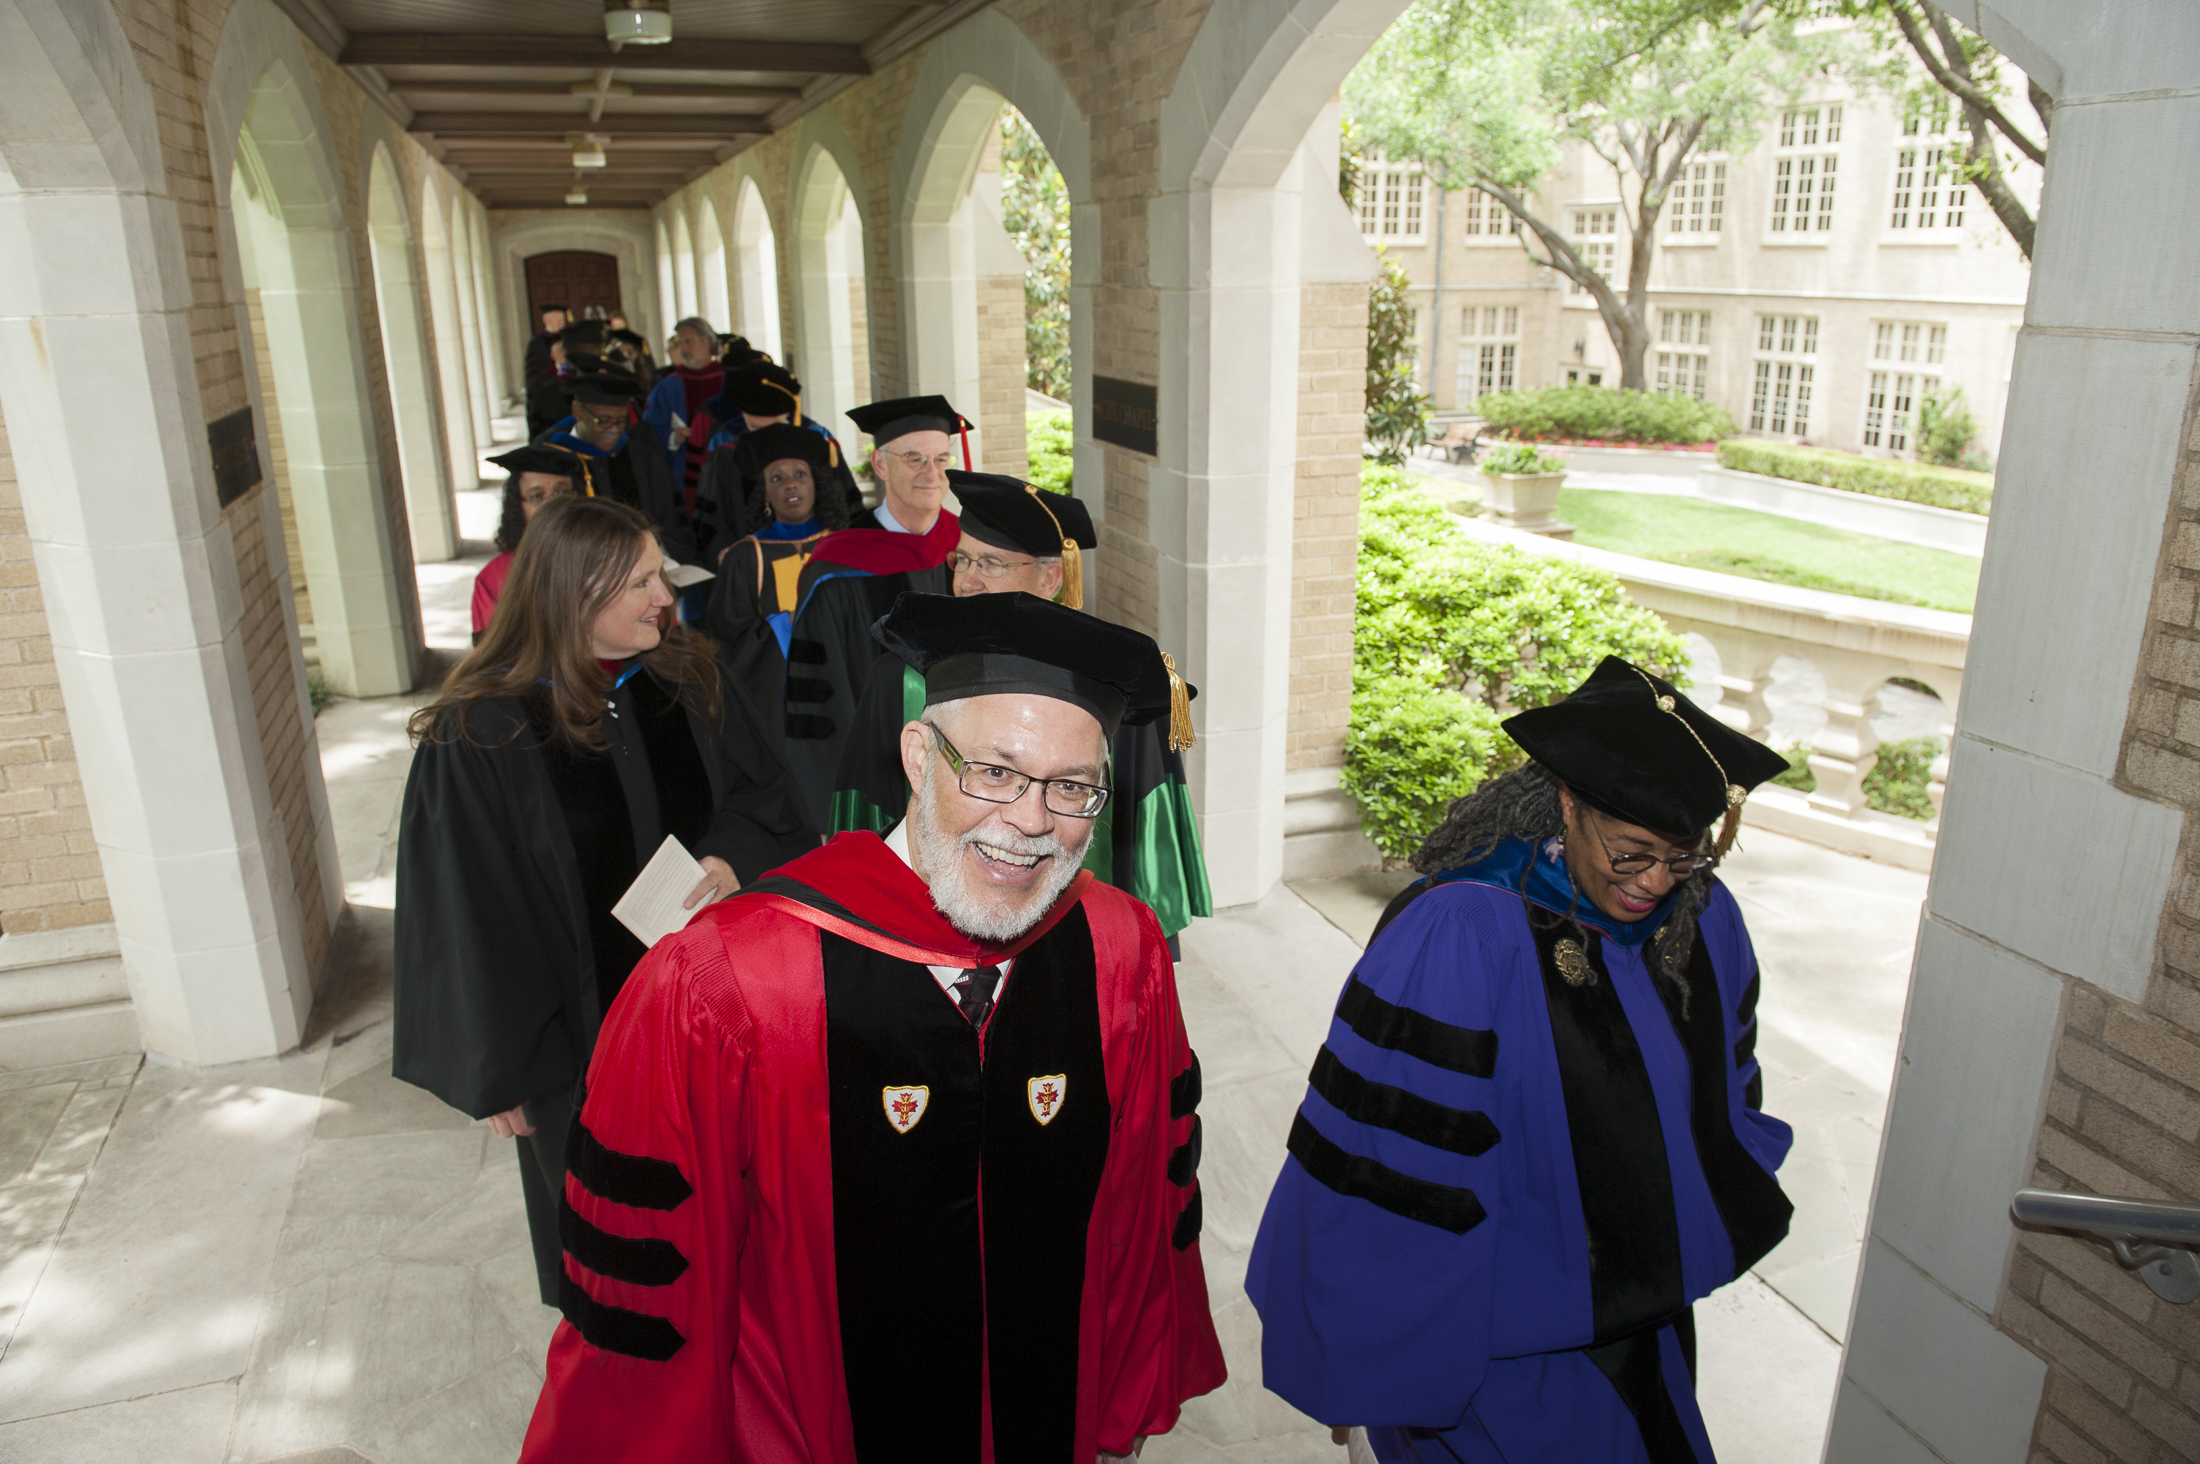 faculty walking in ceremony robe